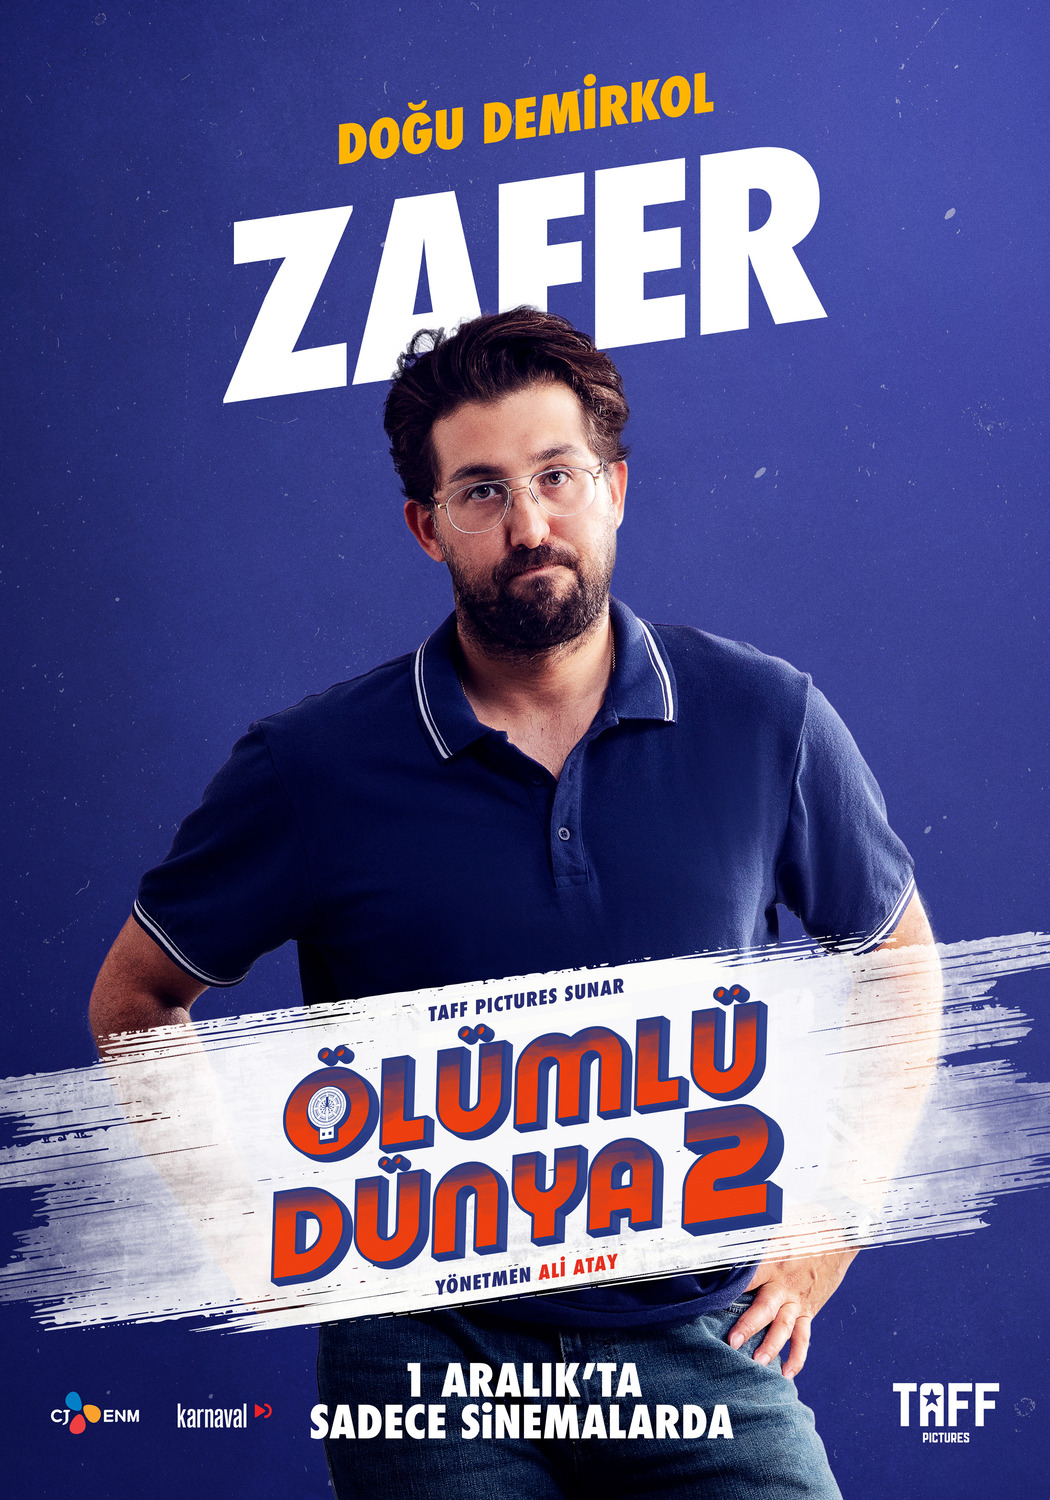 Extra Large Movie Poster Image for Ölümlü Dünya 2 (#5 of 11)